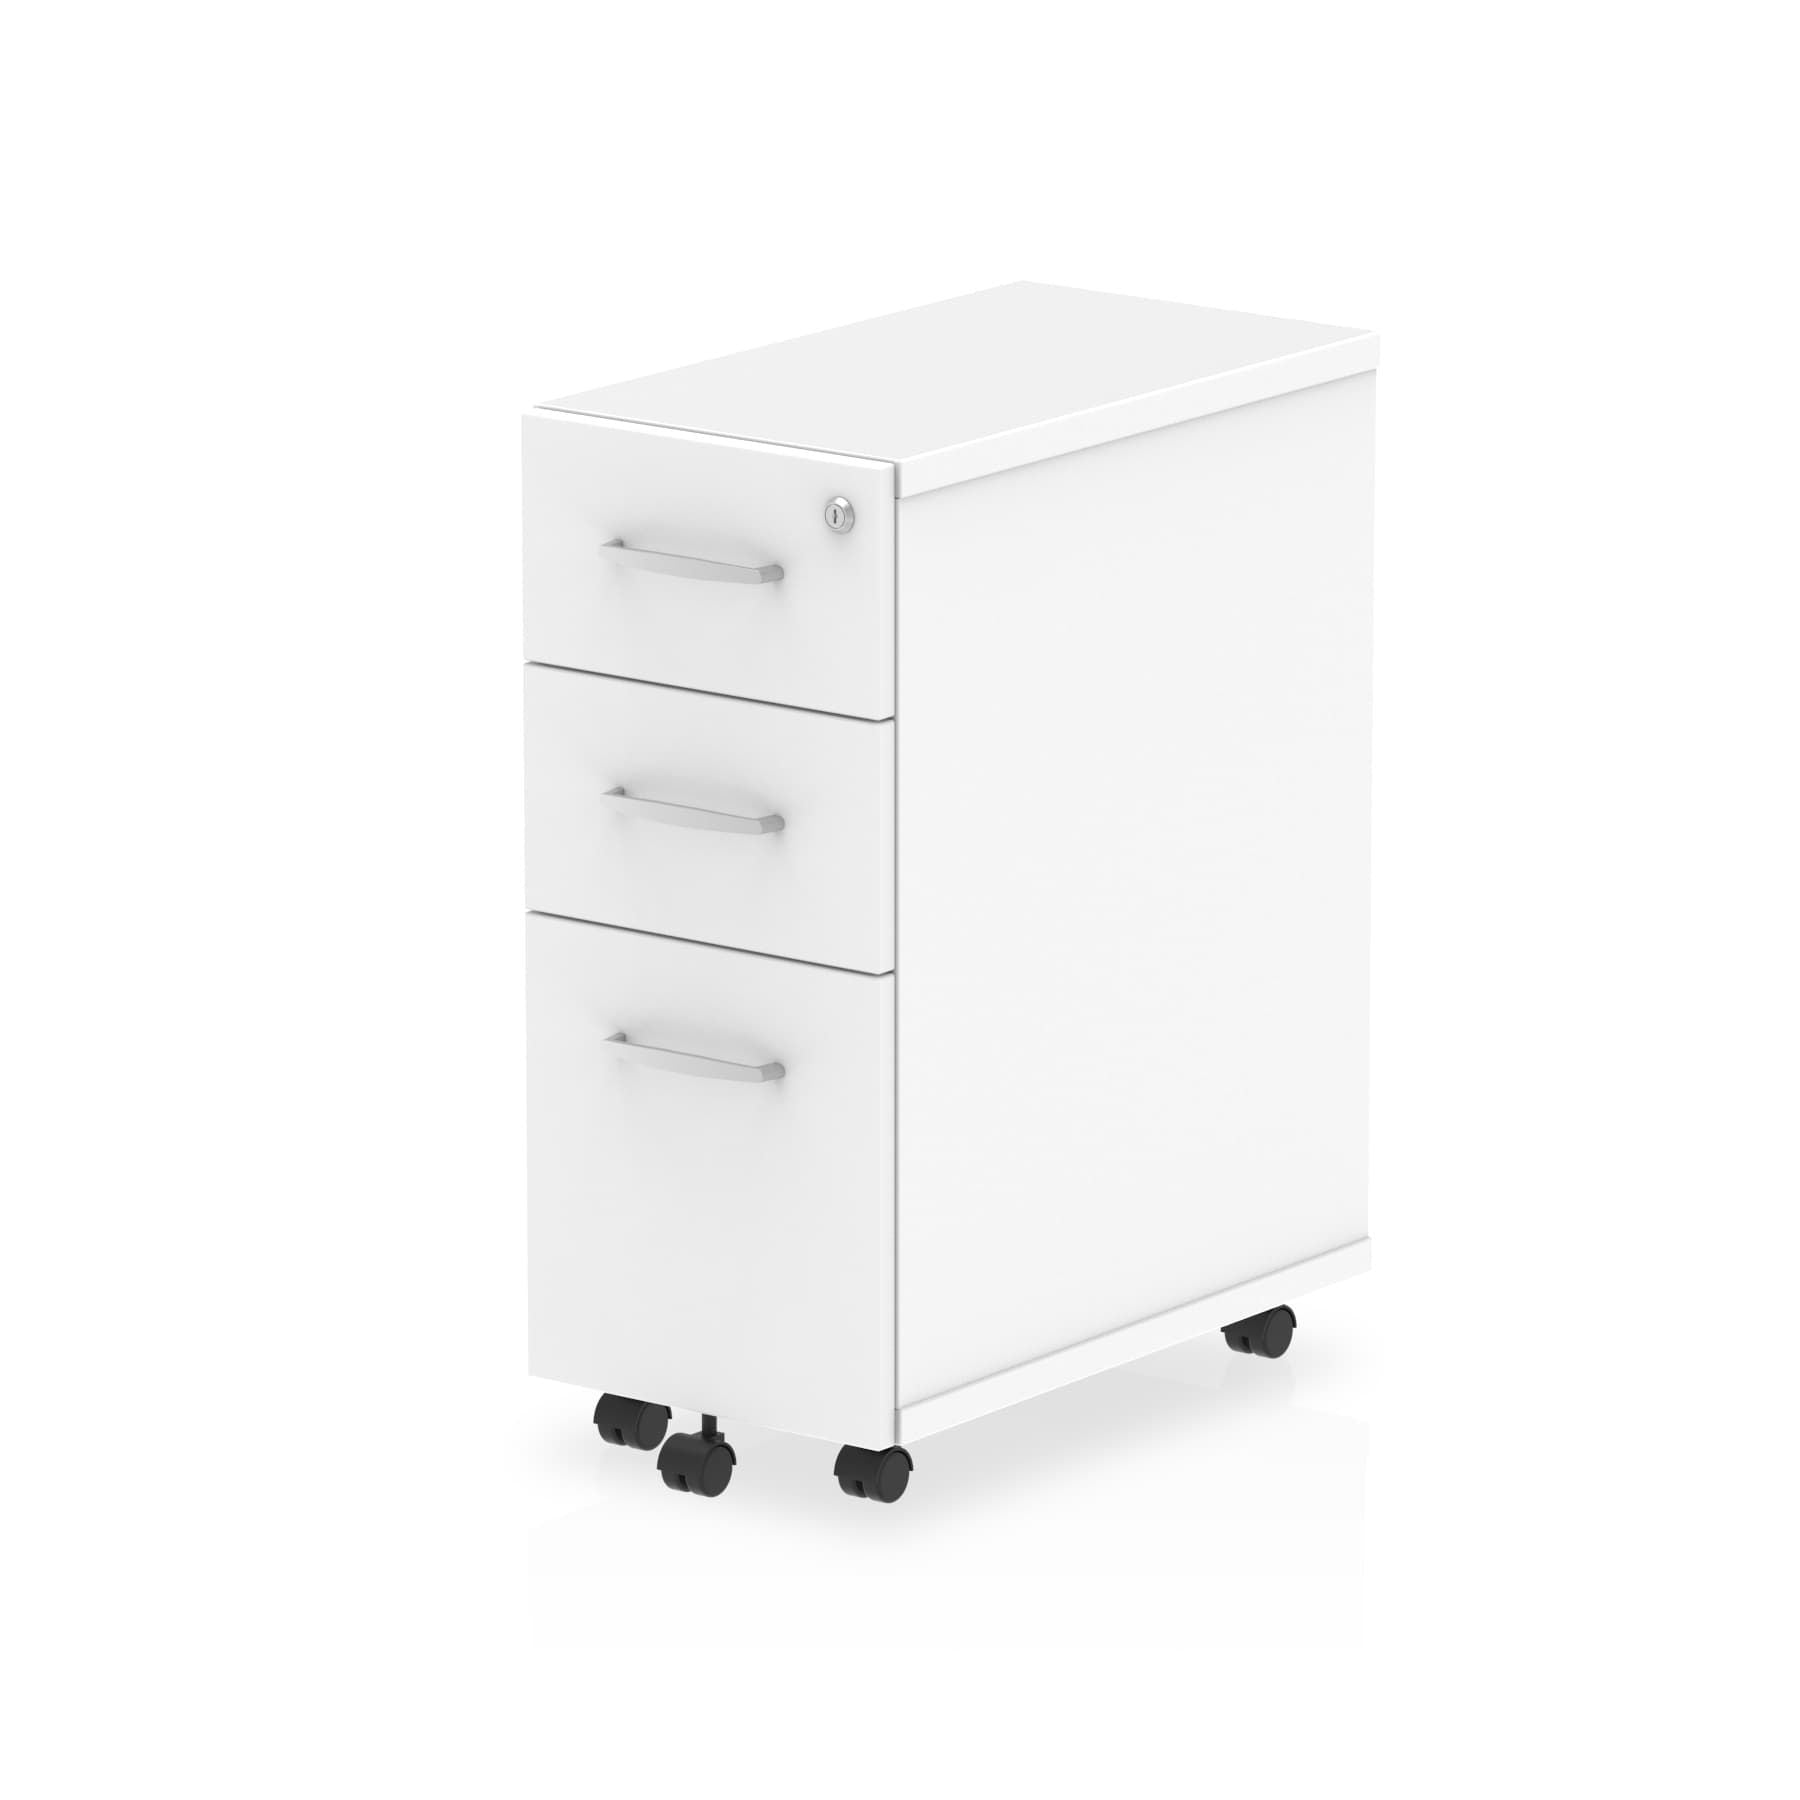 Impulse Narrow Under Desk Pedestal - 3 Drawers, 1 Filing Drawer, Lockable, MFC Material, 300x550x695mm, 5-Year Guarantee